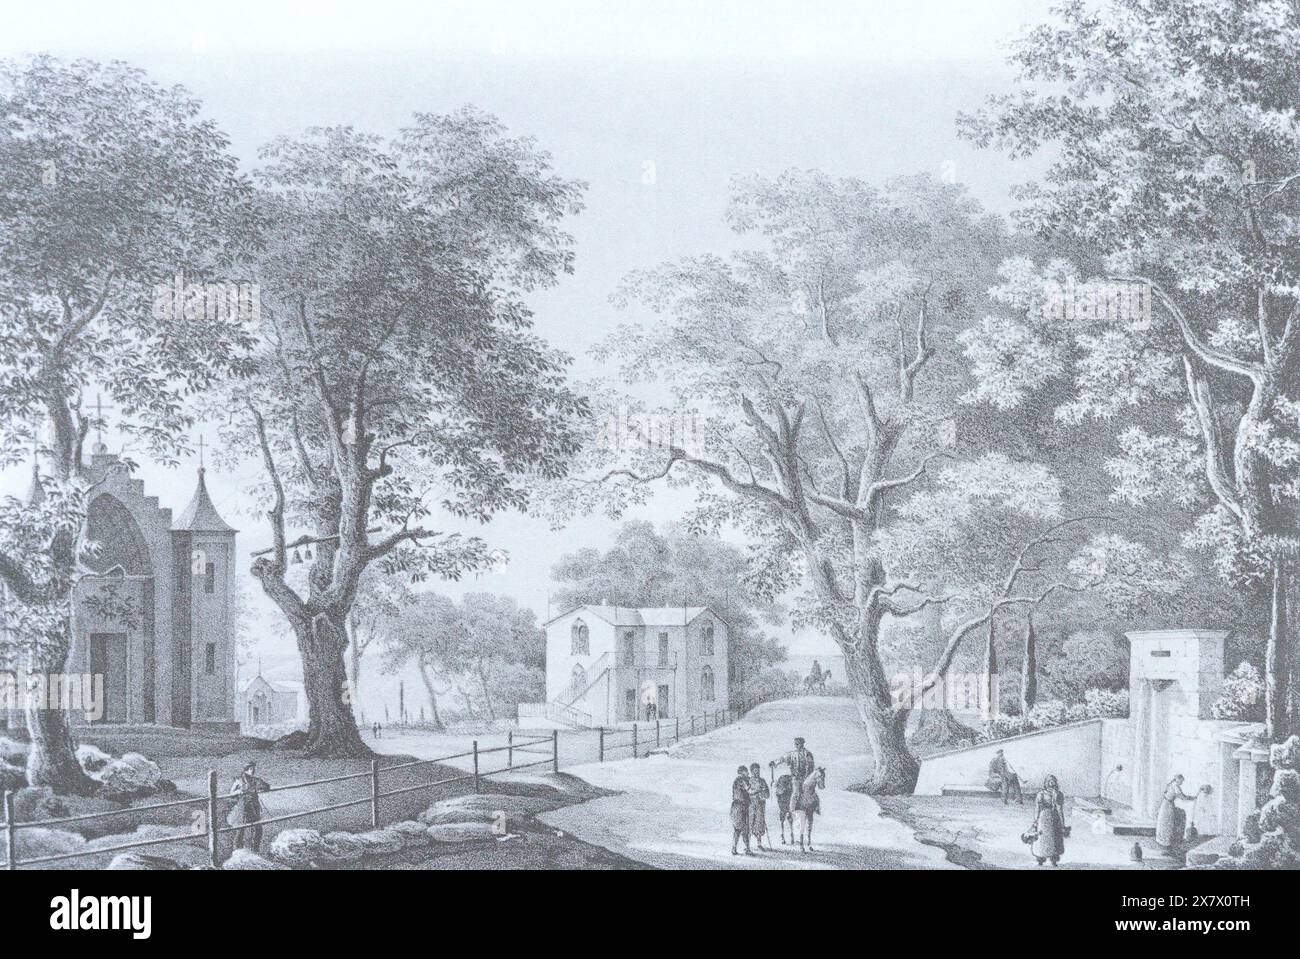 Estate of A.S. Golitsin in Koreiz in Crimea. Engraving by Nikanor Chernetsov from the 19th century. Stock Photo